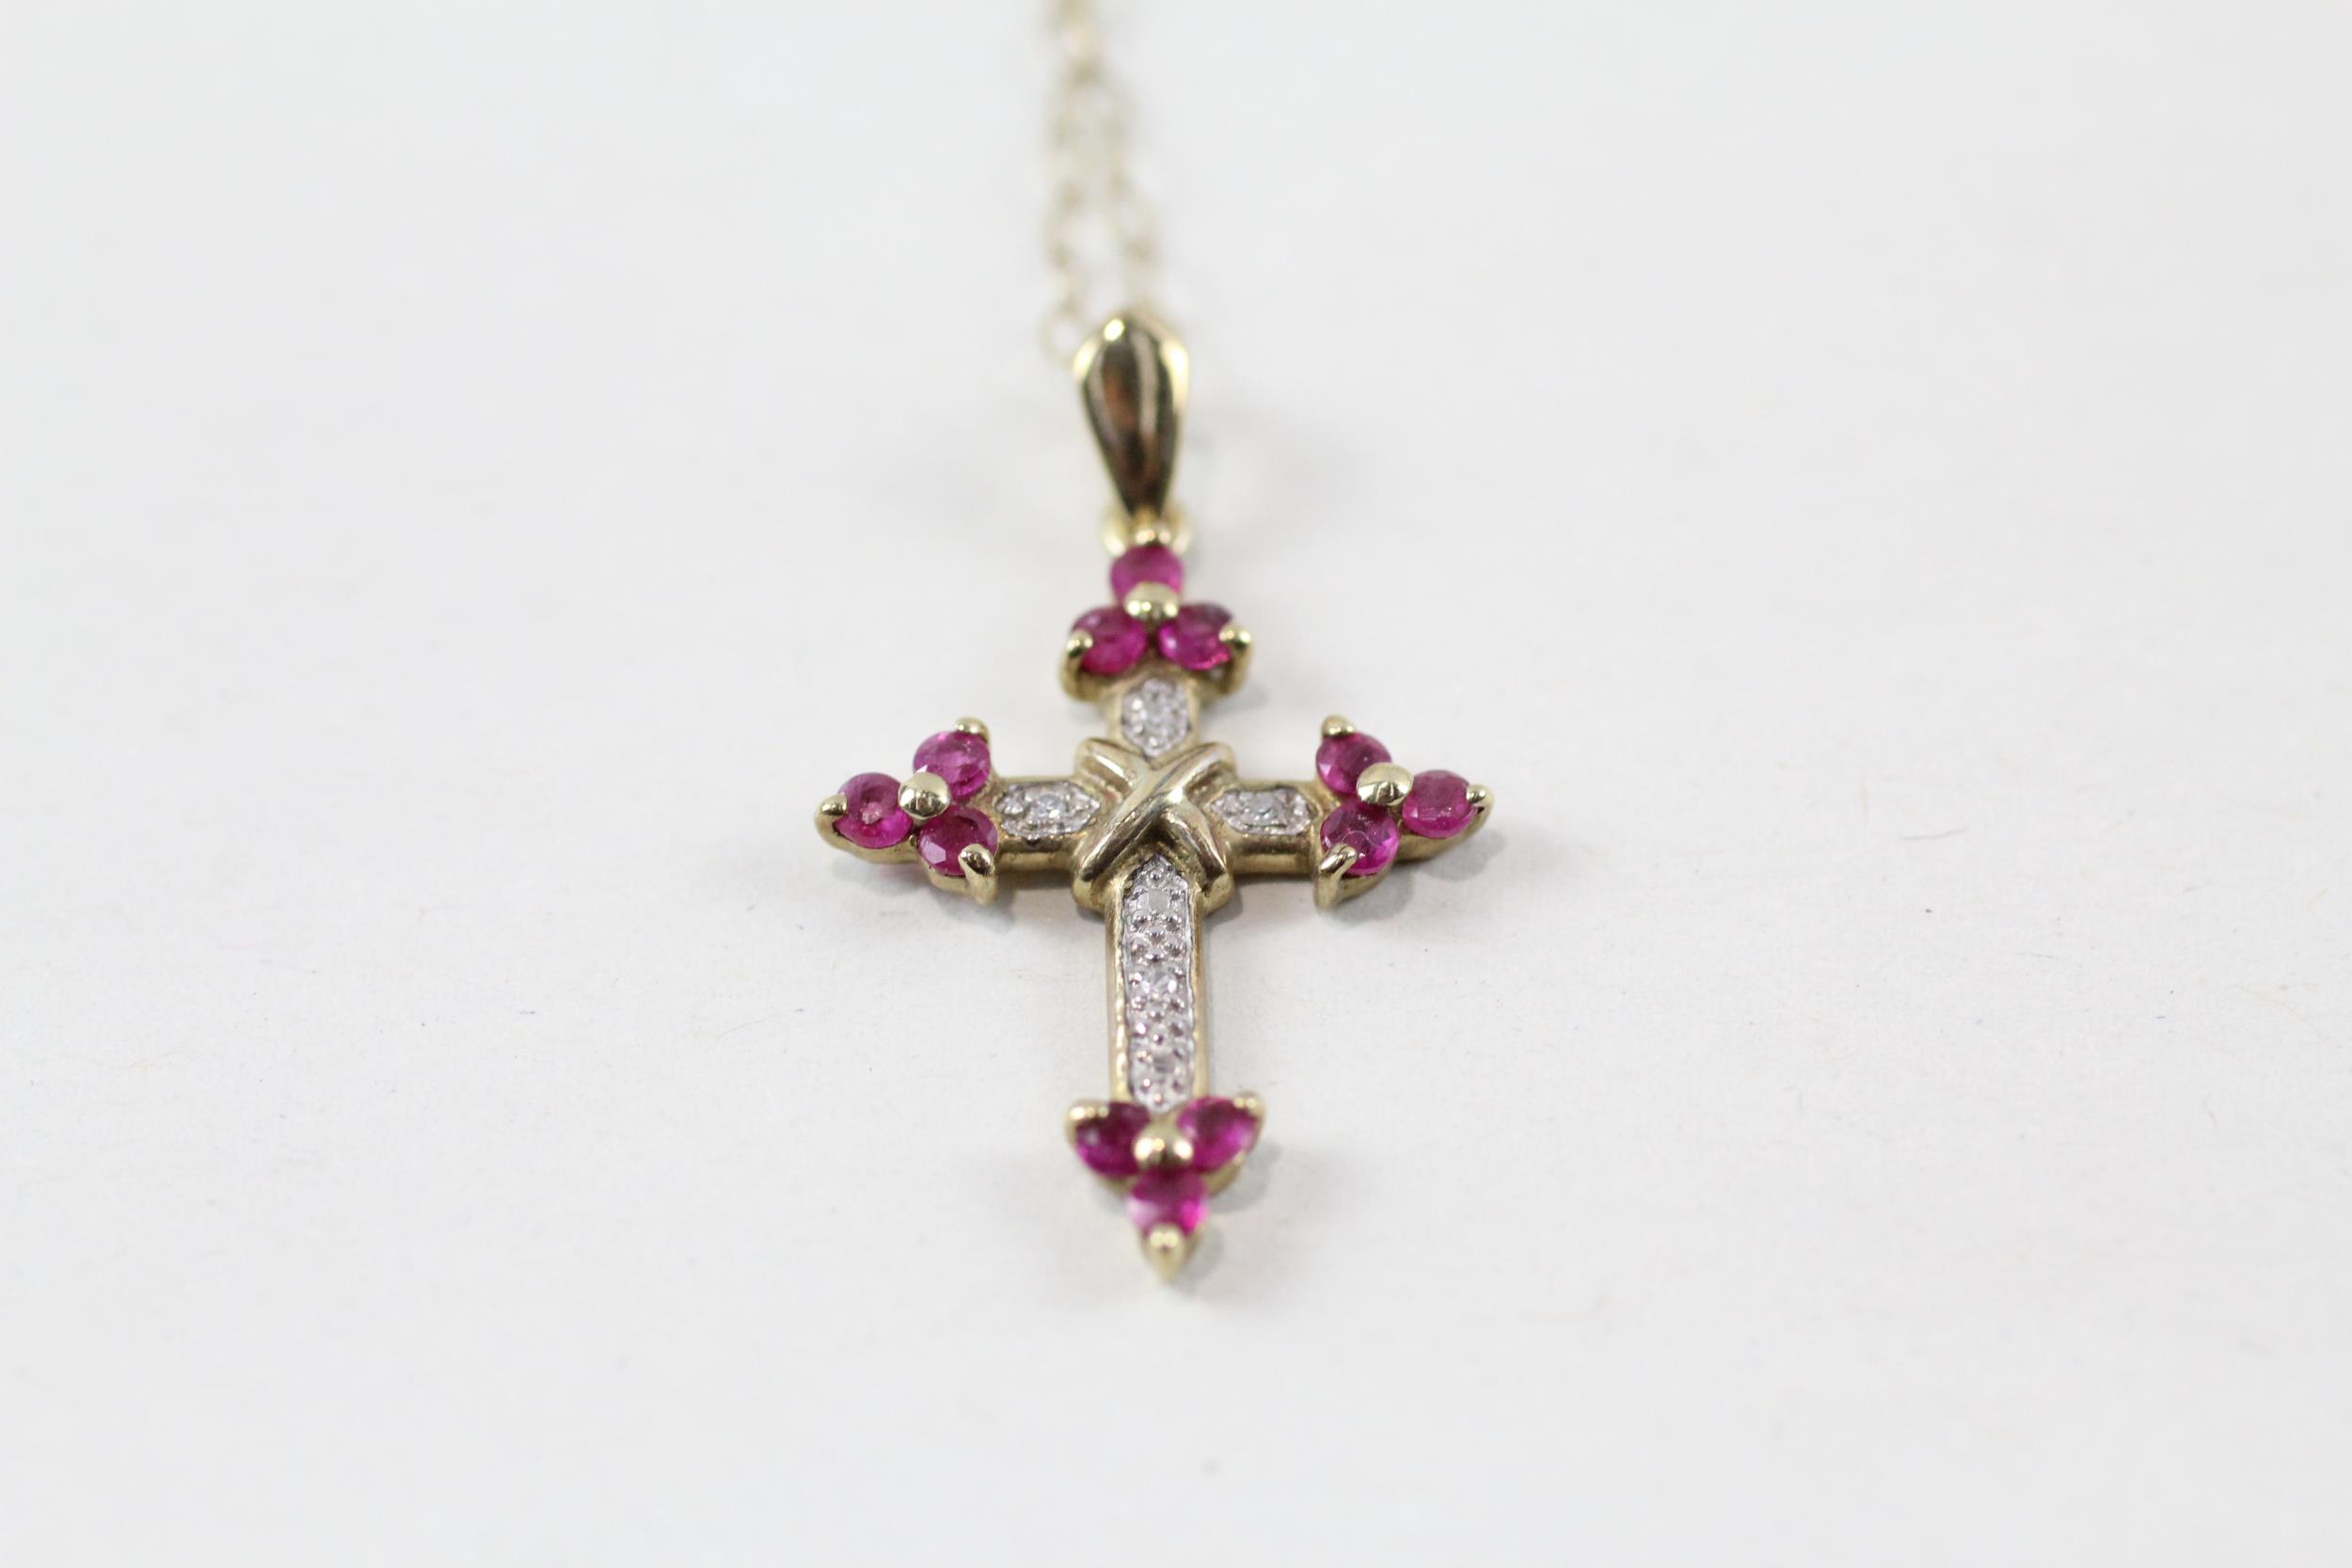 9ct gold ruby & diamond cross pendant & chain (1.8g) - Image 2 of 4